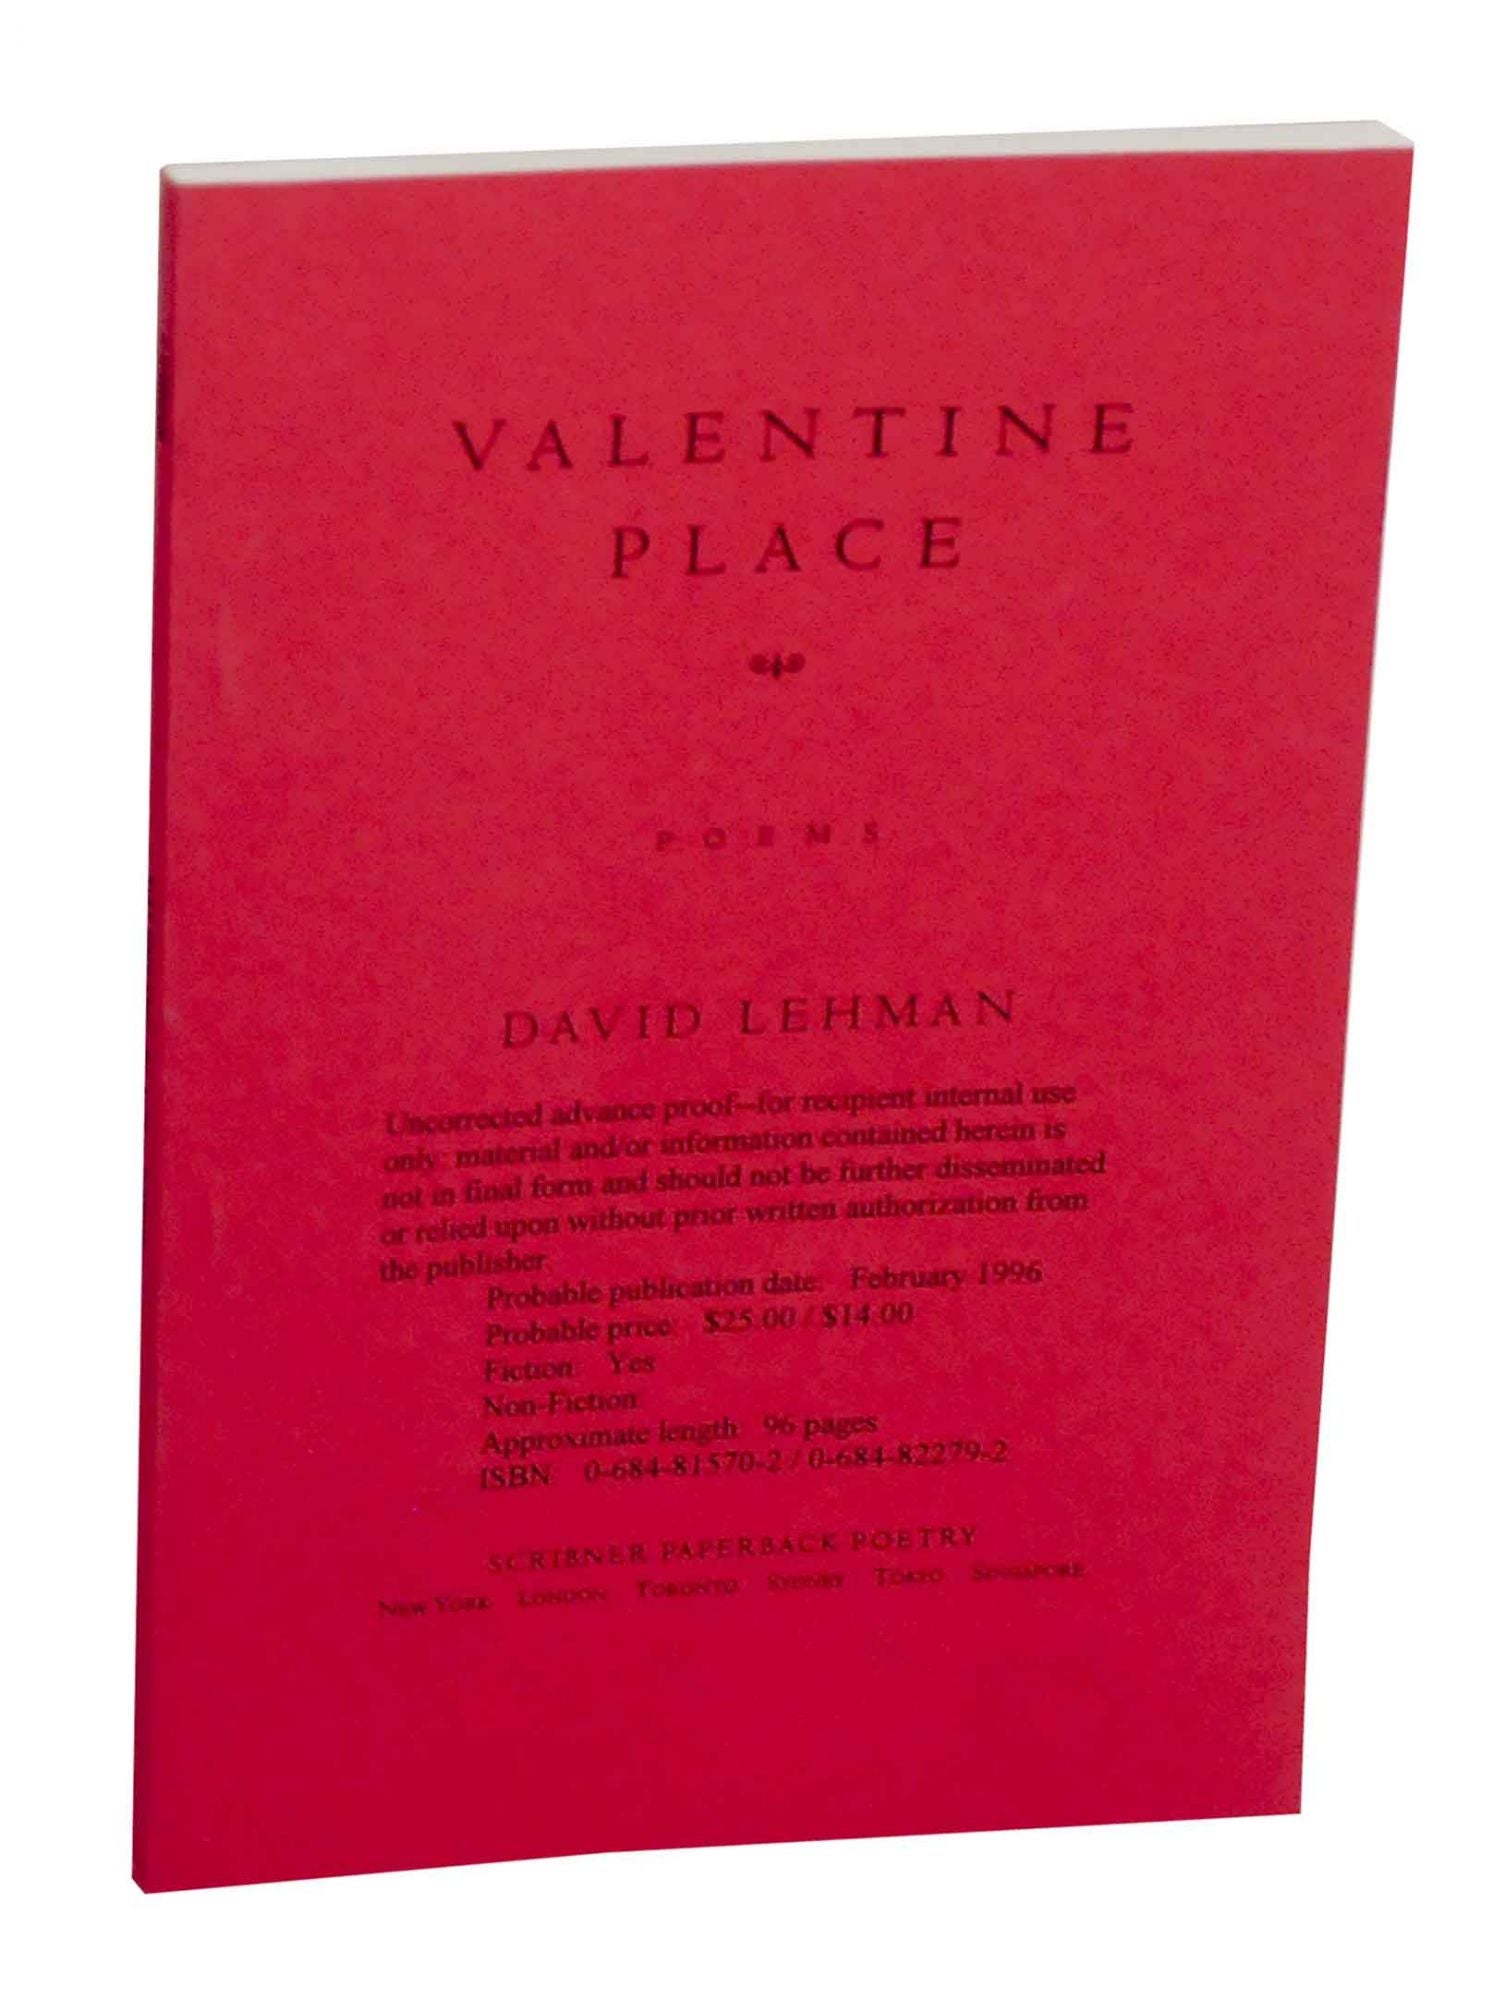 David　Place　Valentine　LEHMAN